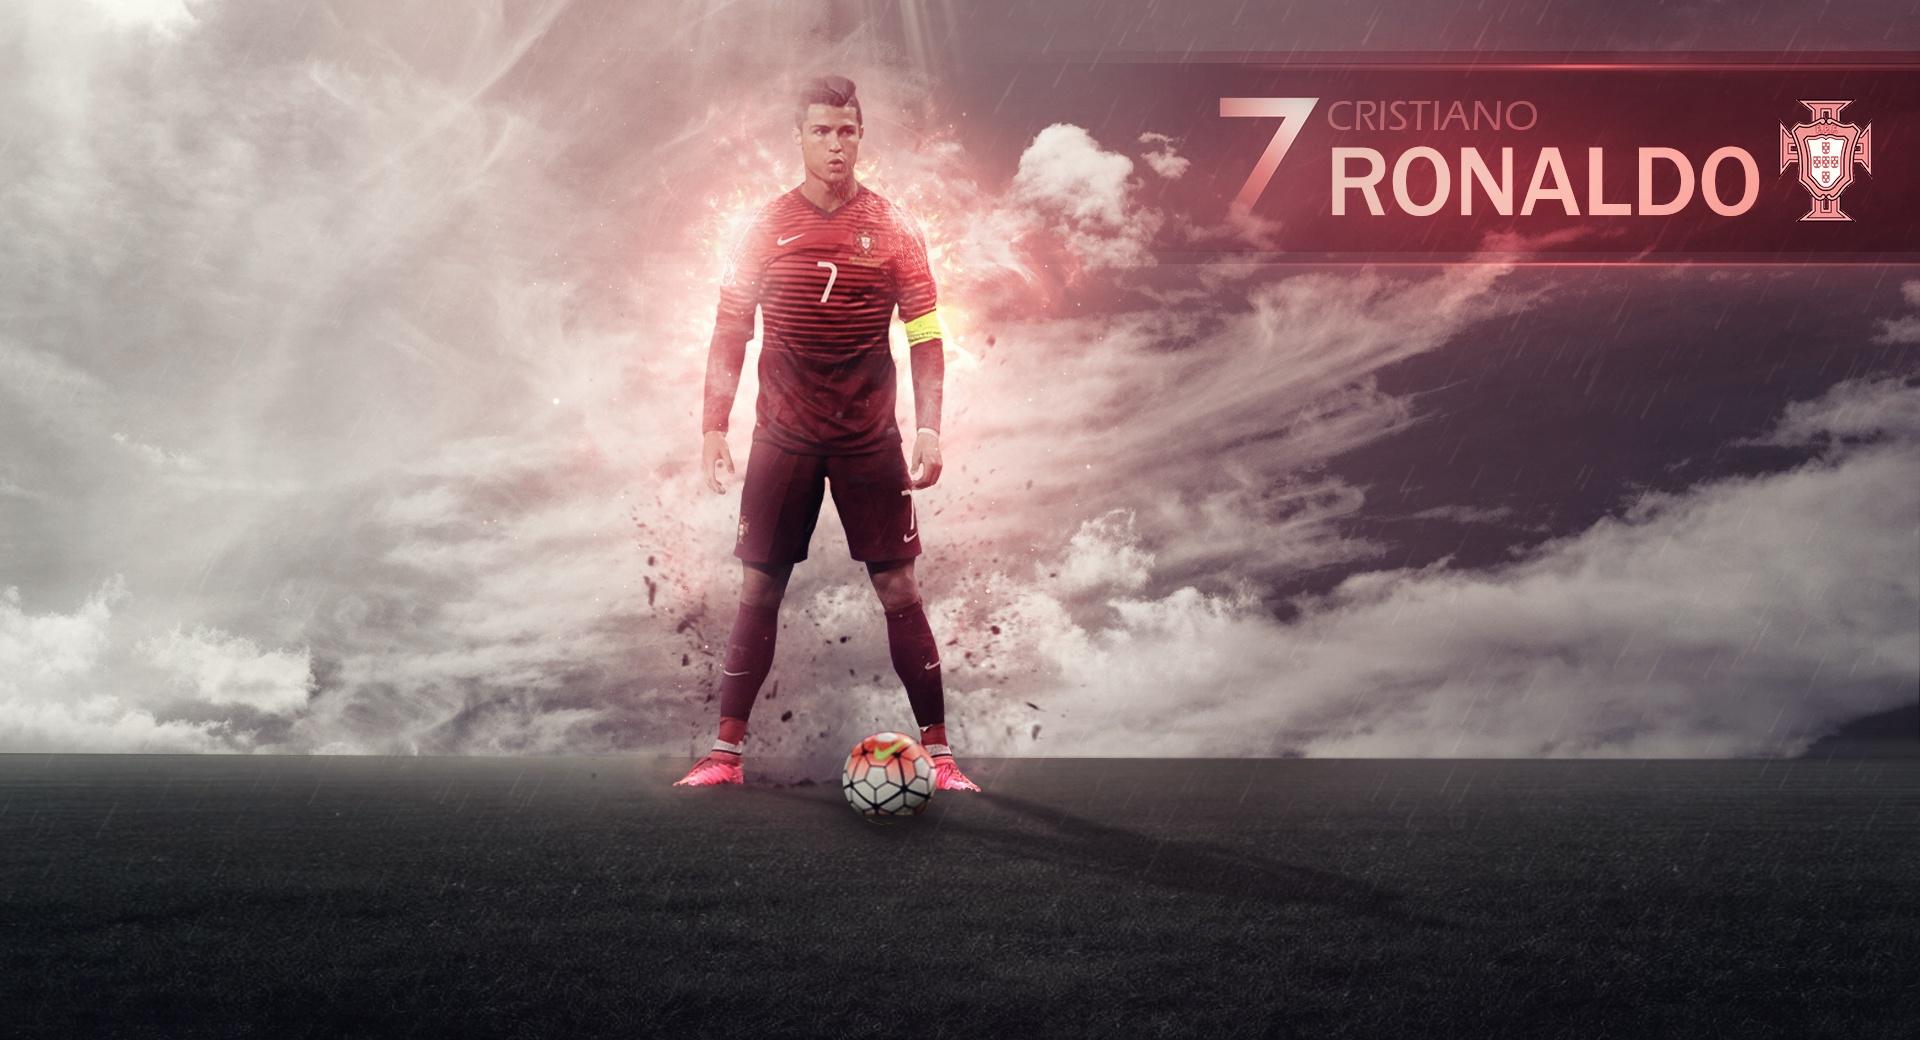 UEFA EURO 2016  Cristiano Ronaldo at 2048 x 2048 iPad size wallpapers HD quality